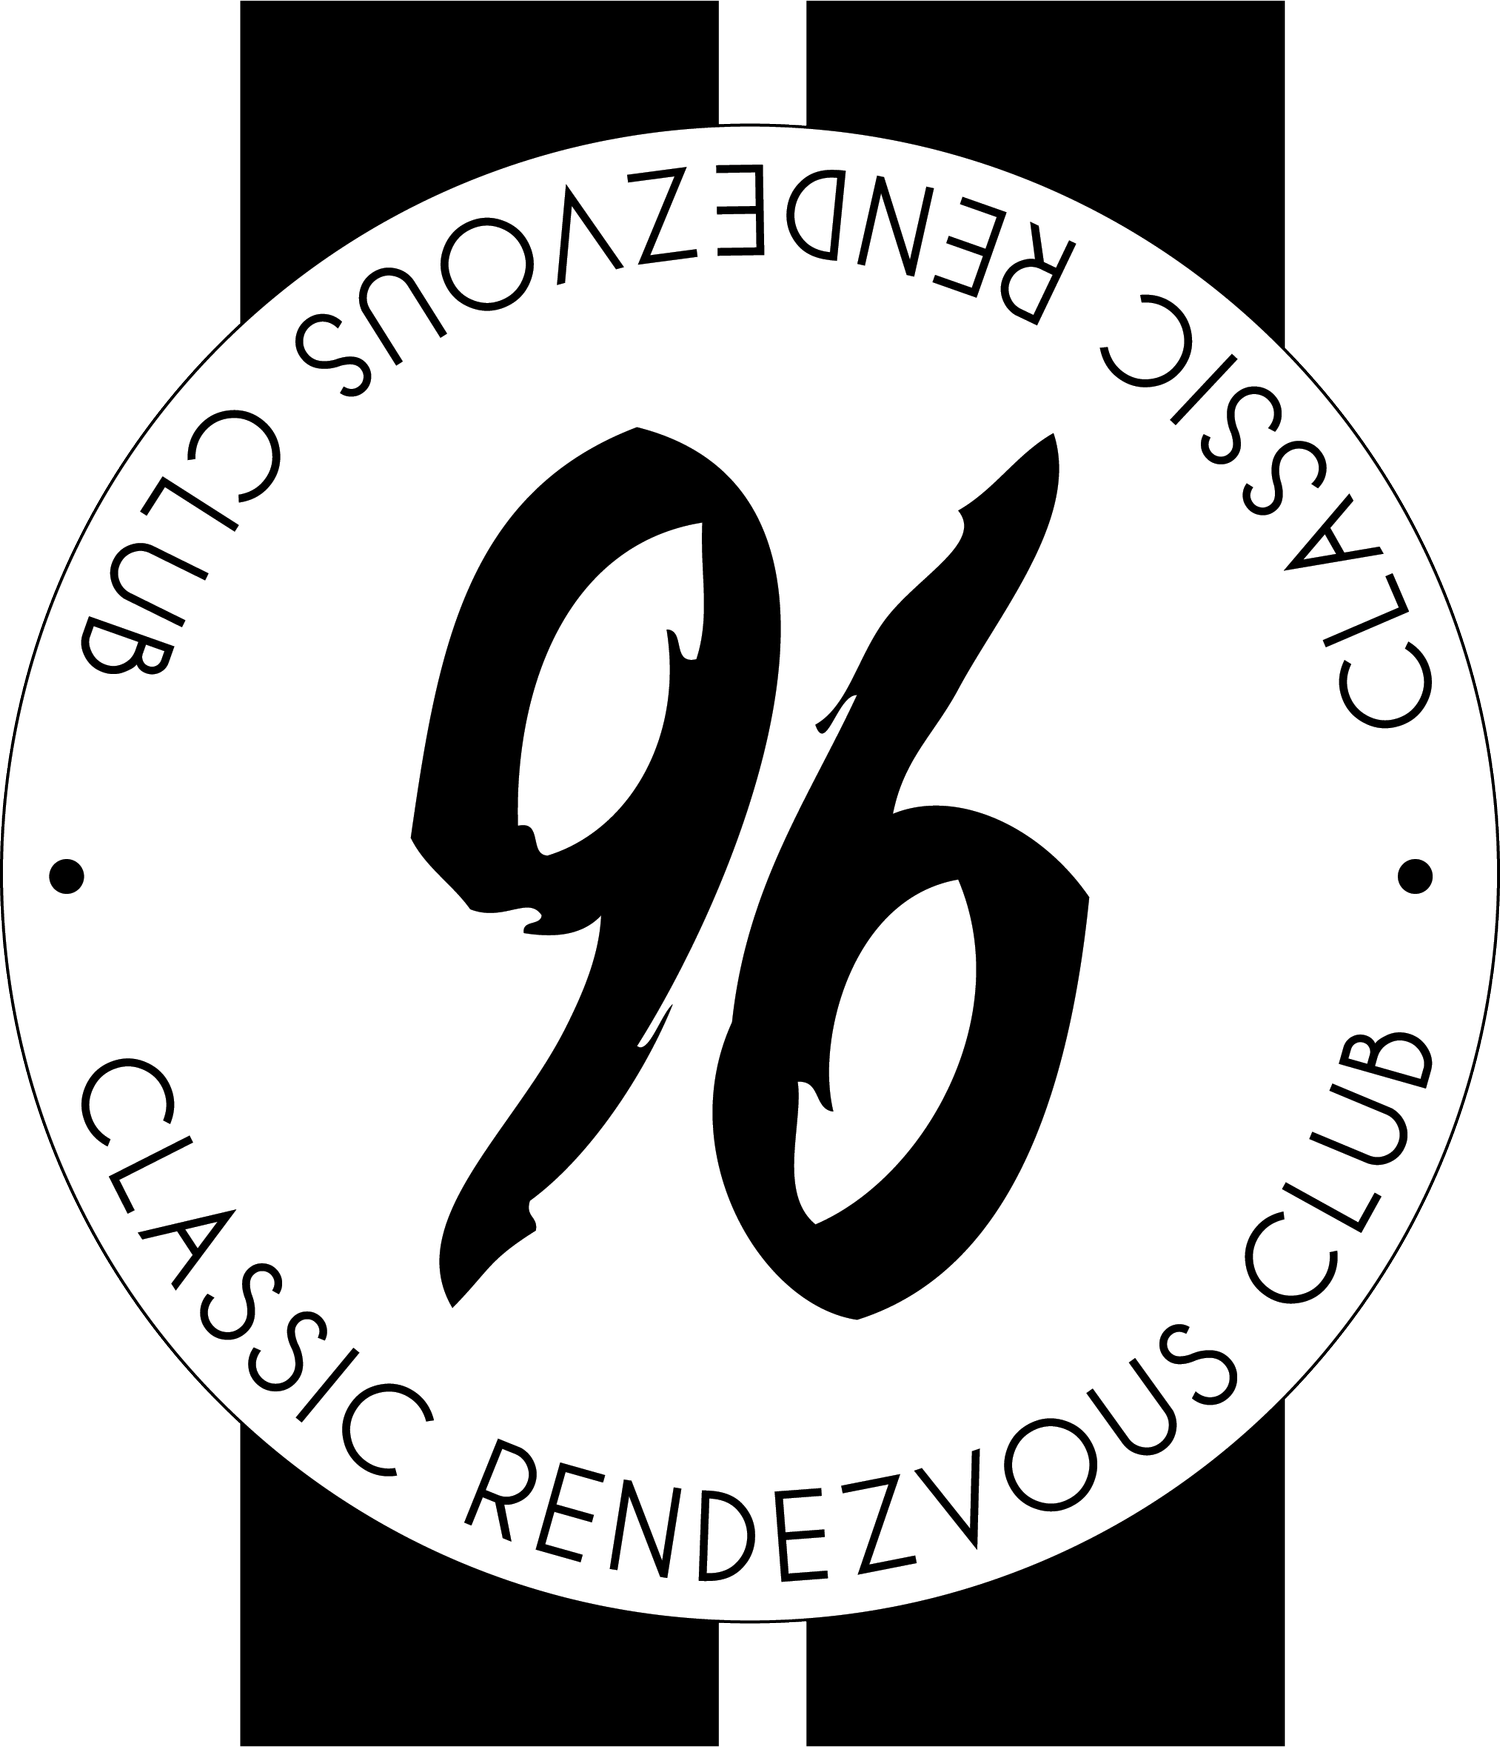 The 96 Club